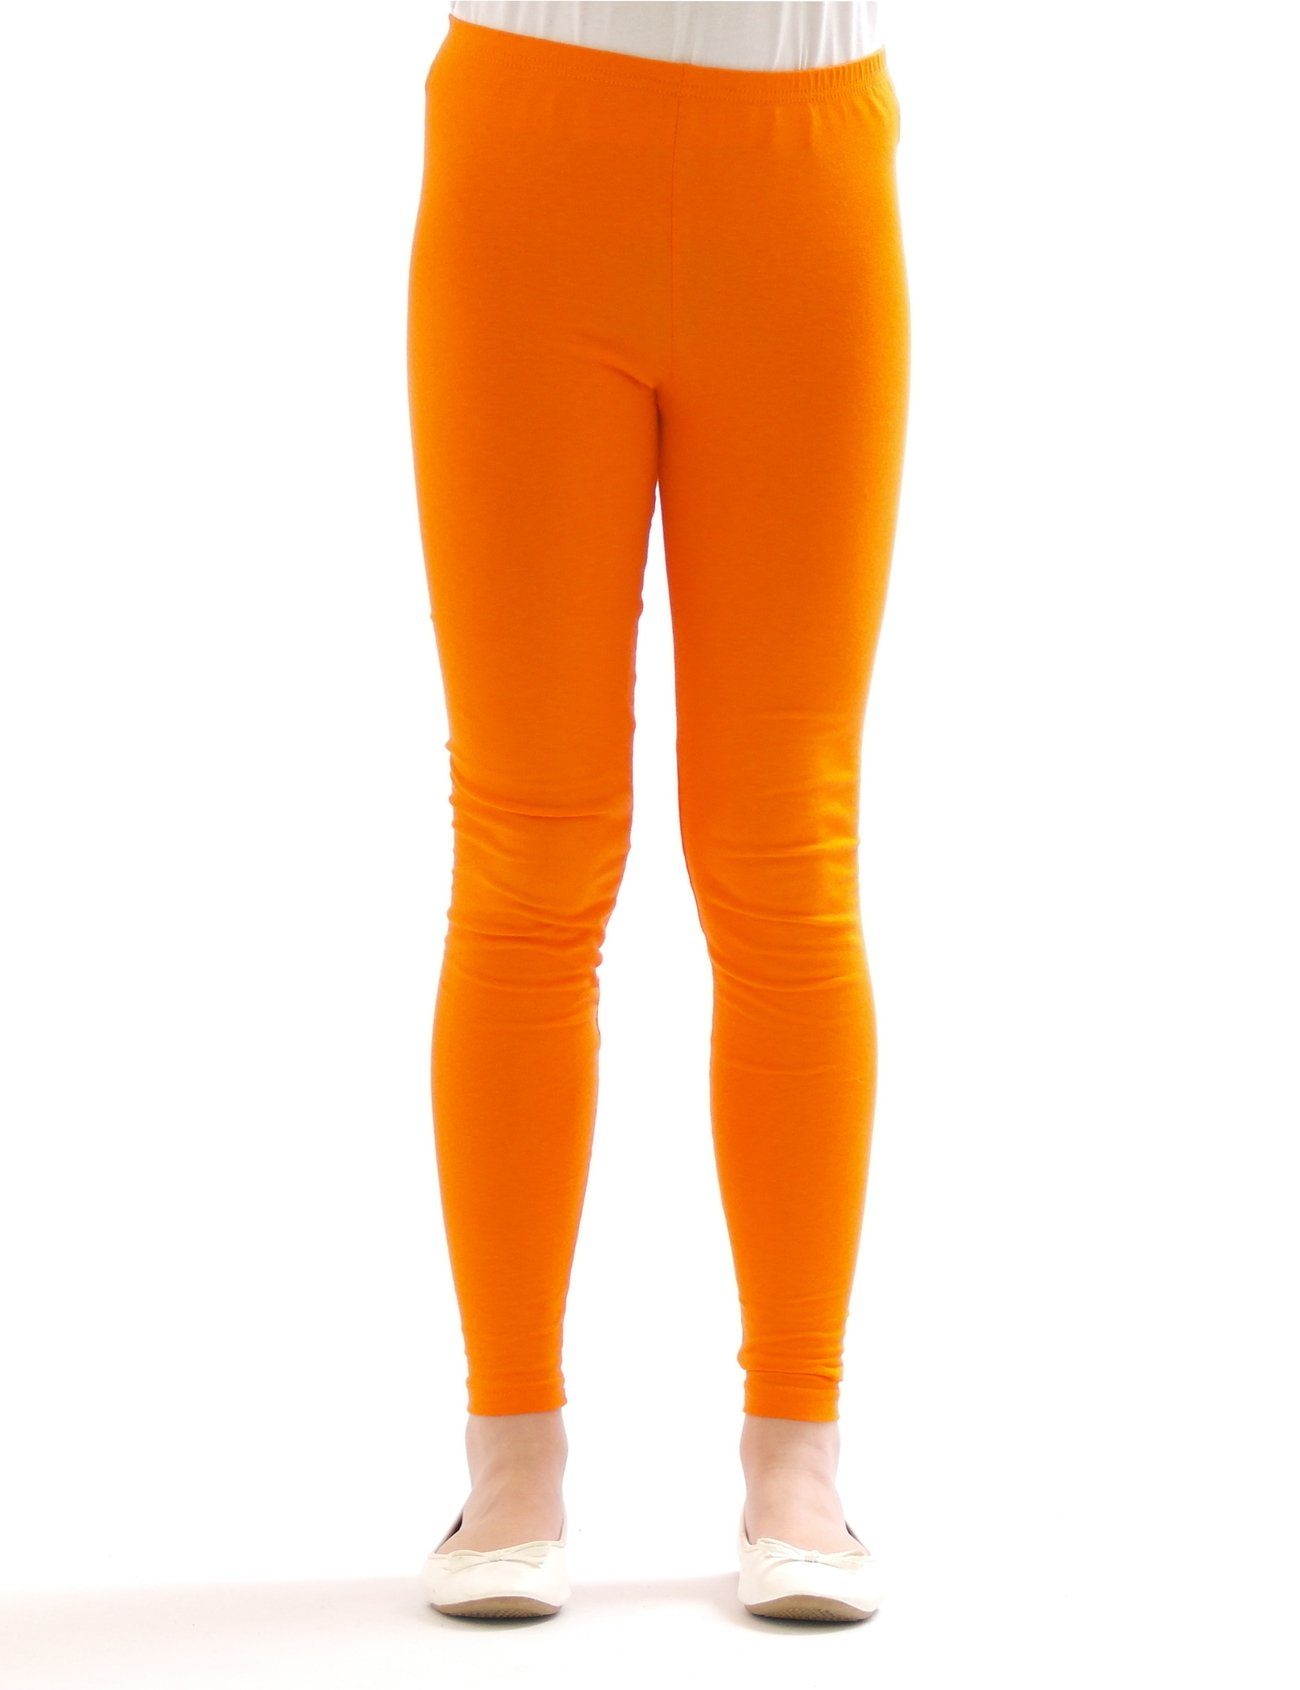 lang Kinder Baumwolle blickdicht Leggings SYS Mädchen Leggings Orange Baby Hose aus